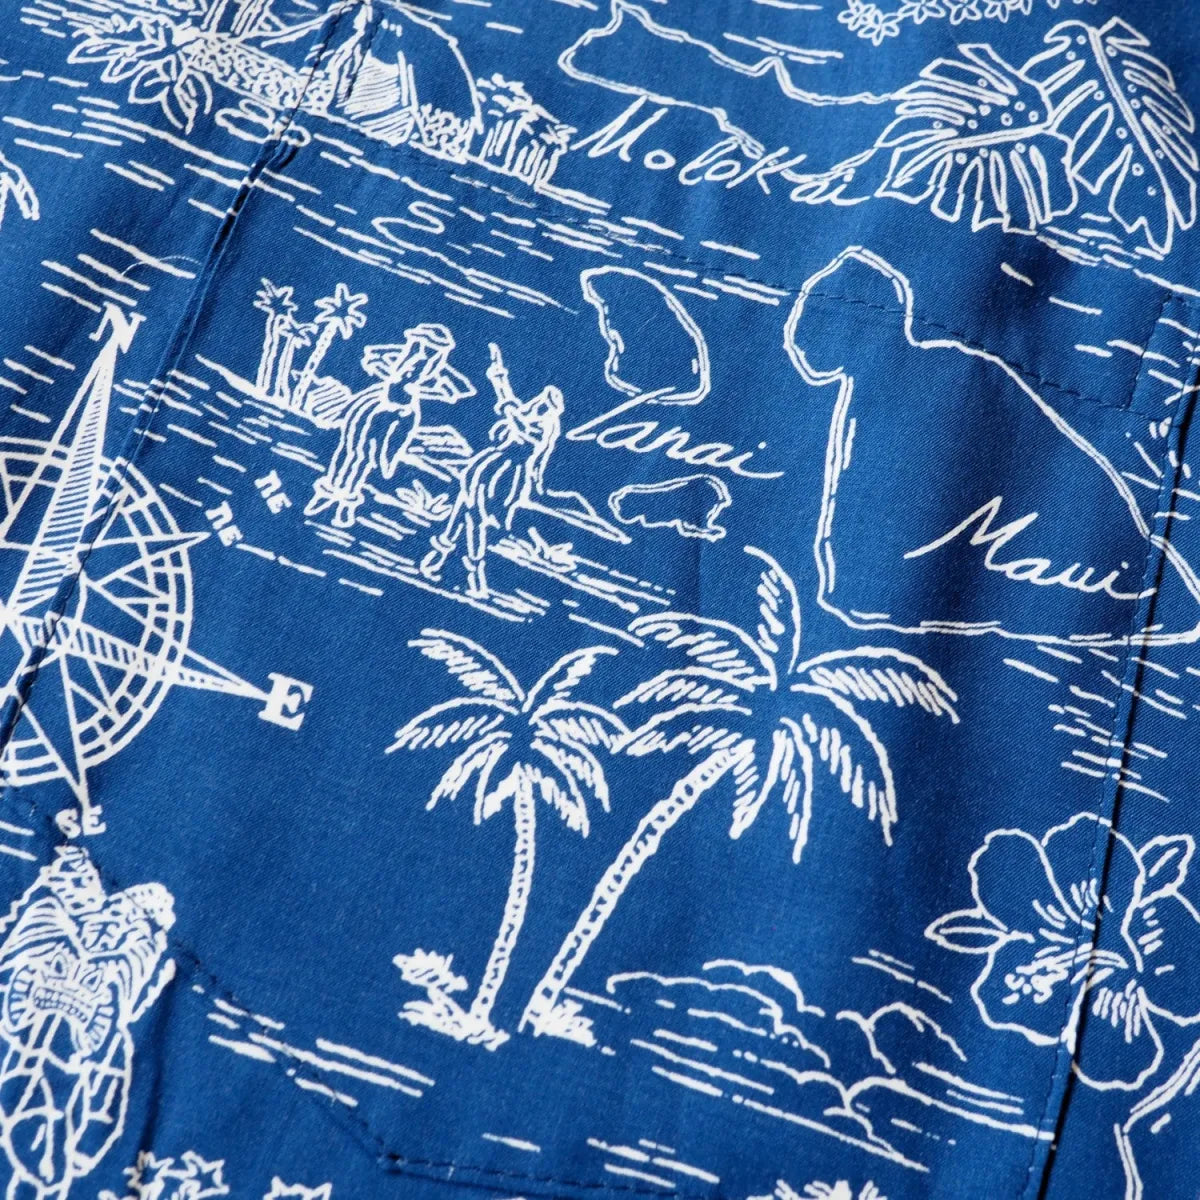 Island cruise blue hawaiian rayon shirt